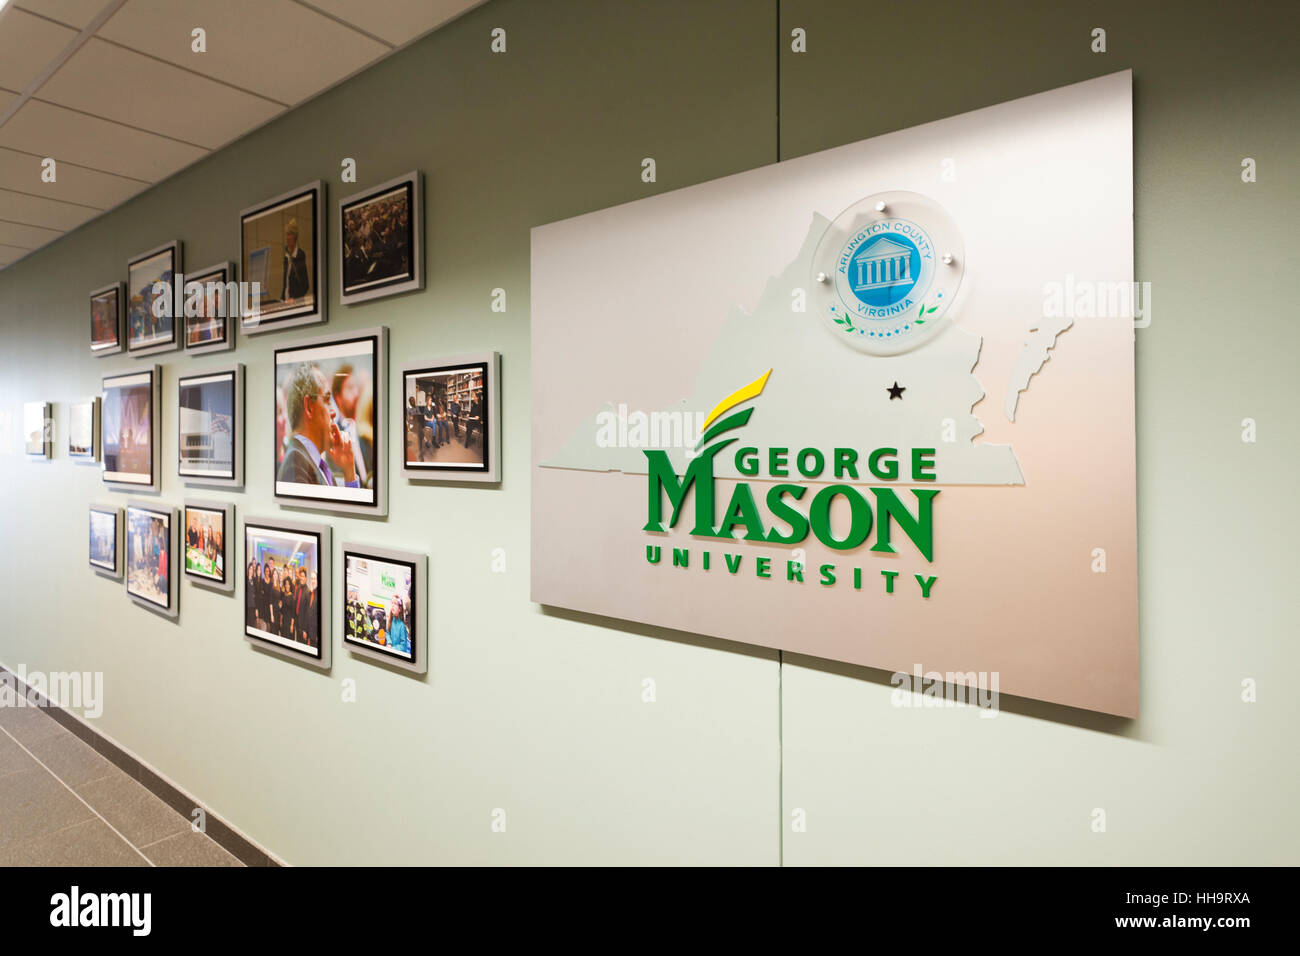 George Mason University sign - USA Stock Photo